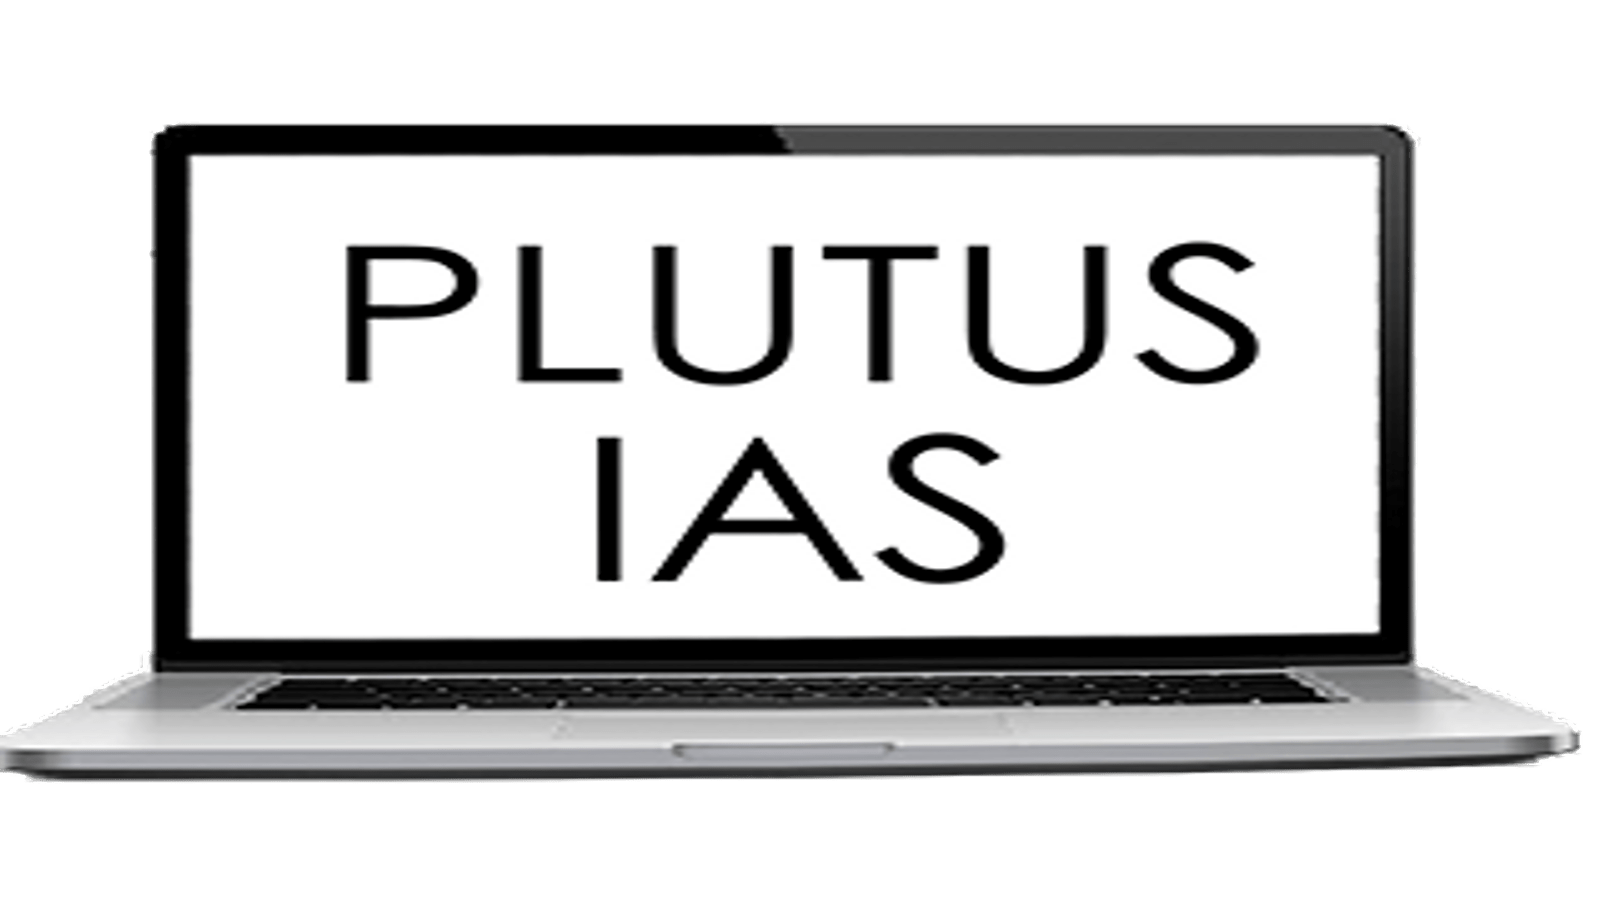 Plutus IAS Online Coaching Nagpur